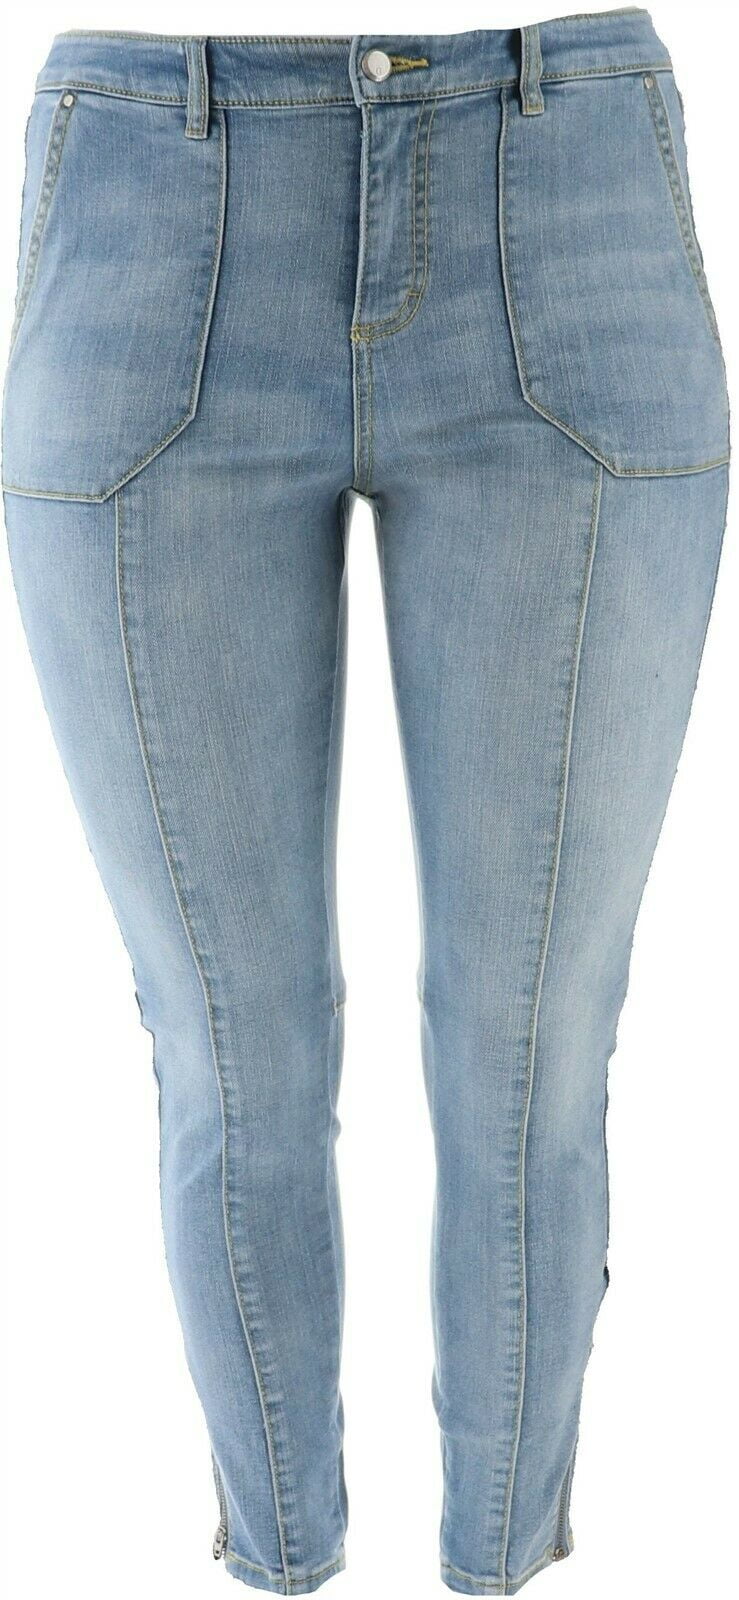 g by giuliana jeans